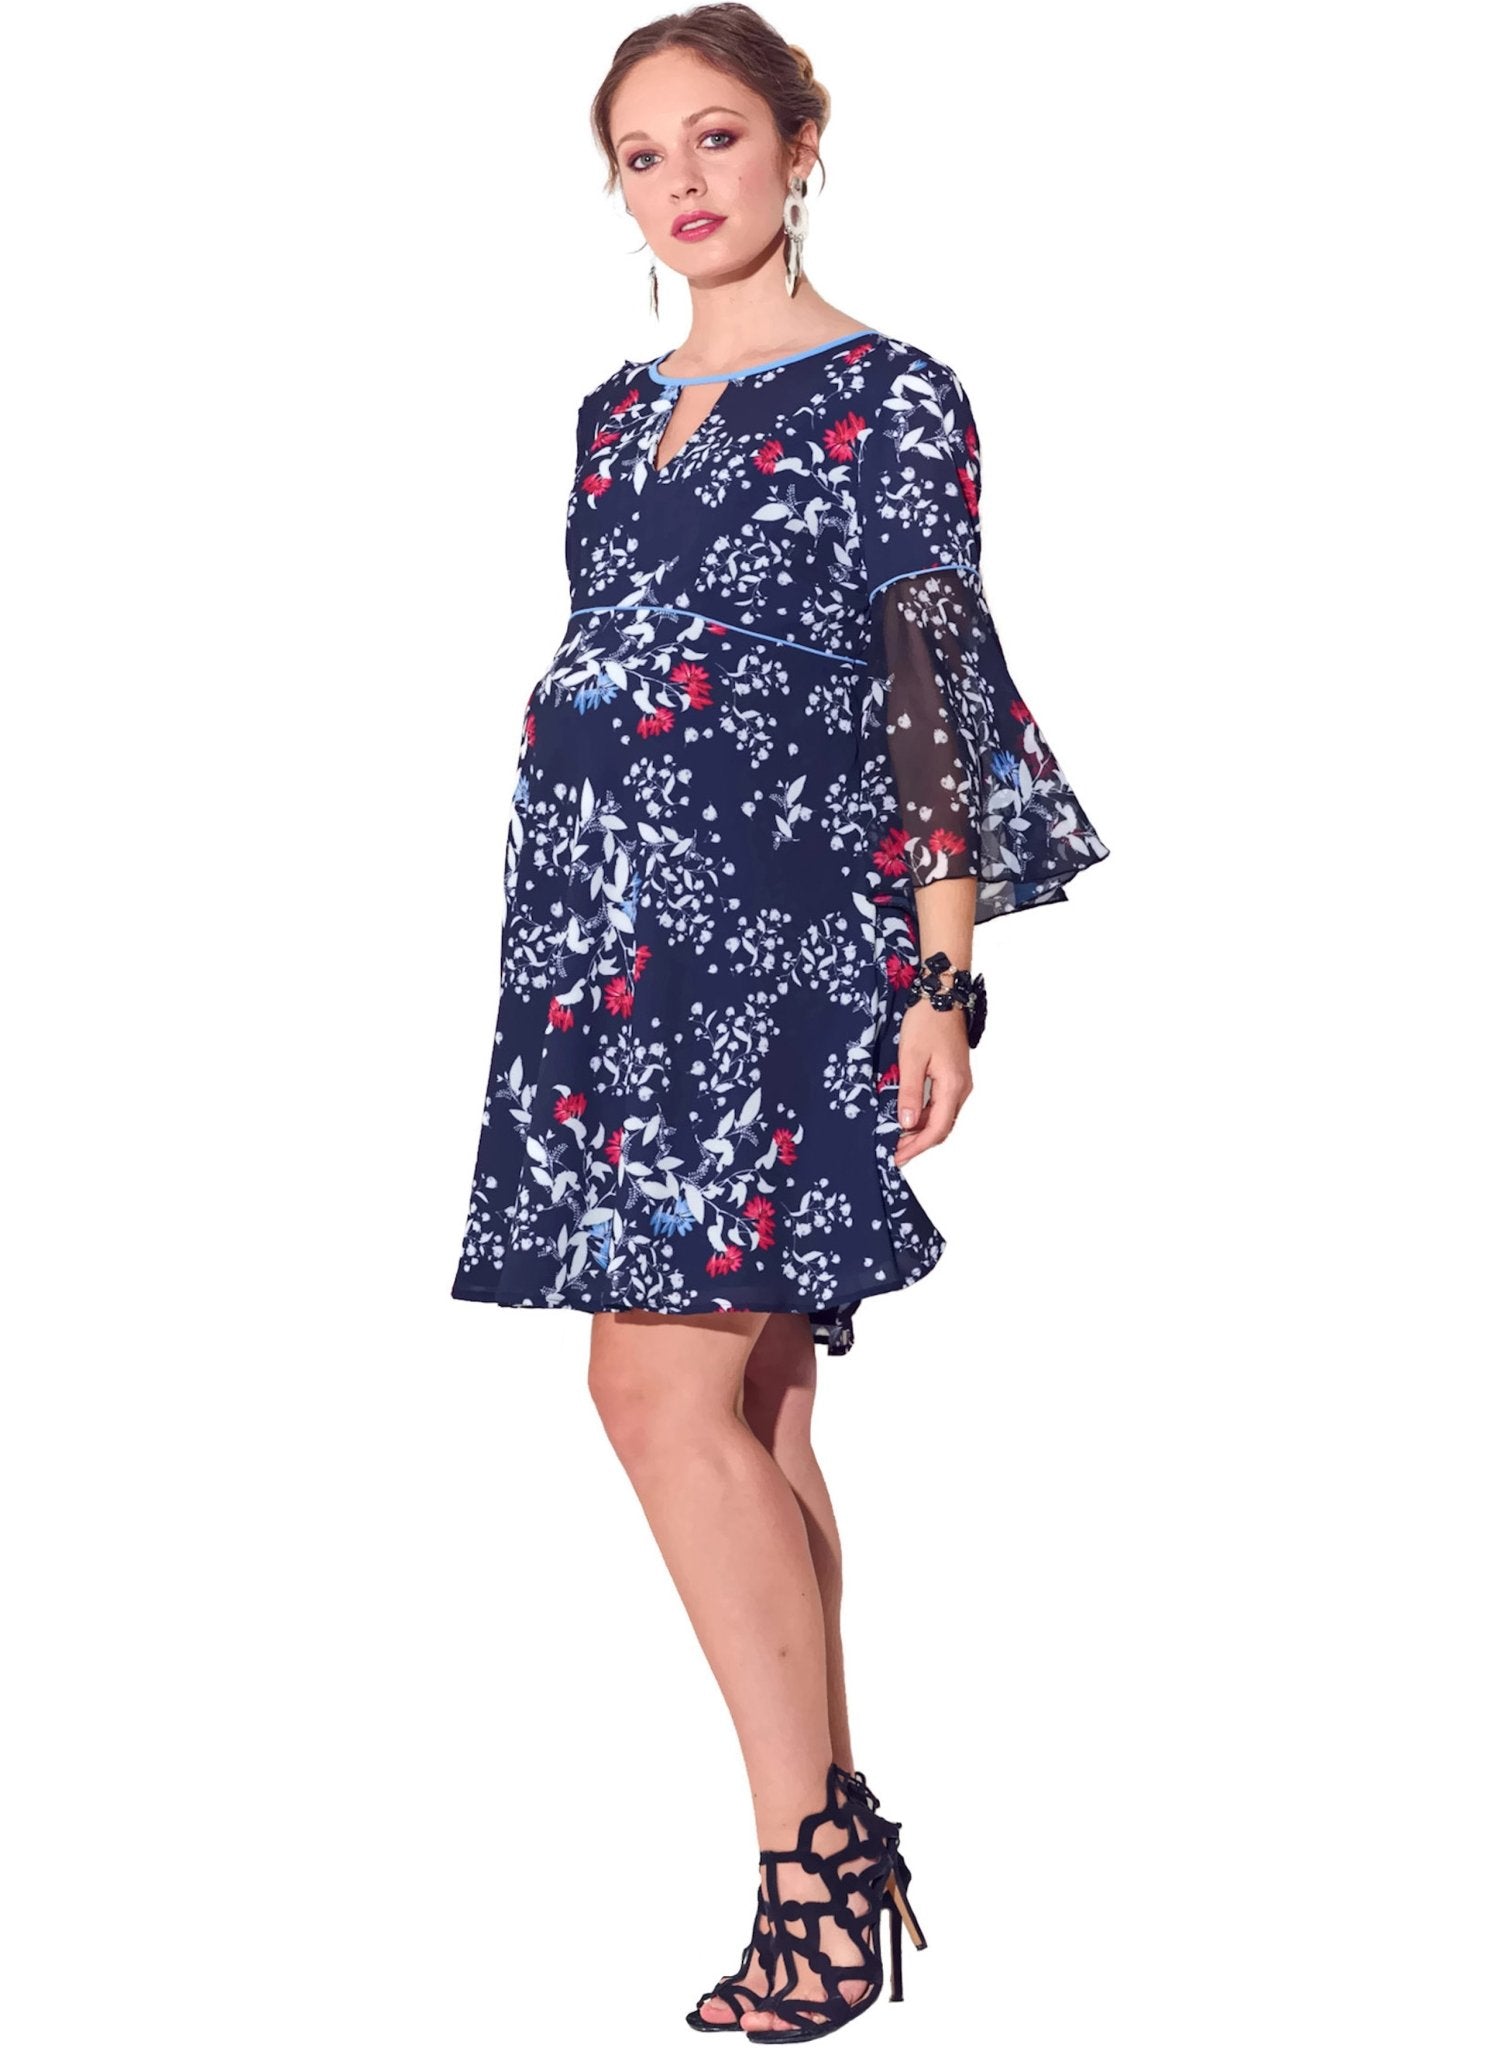 Chiffon Floral Maternity Dress - Mums and Bumps